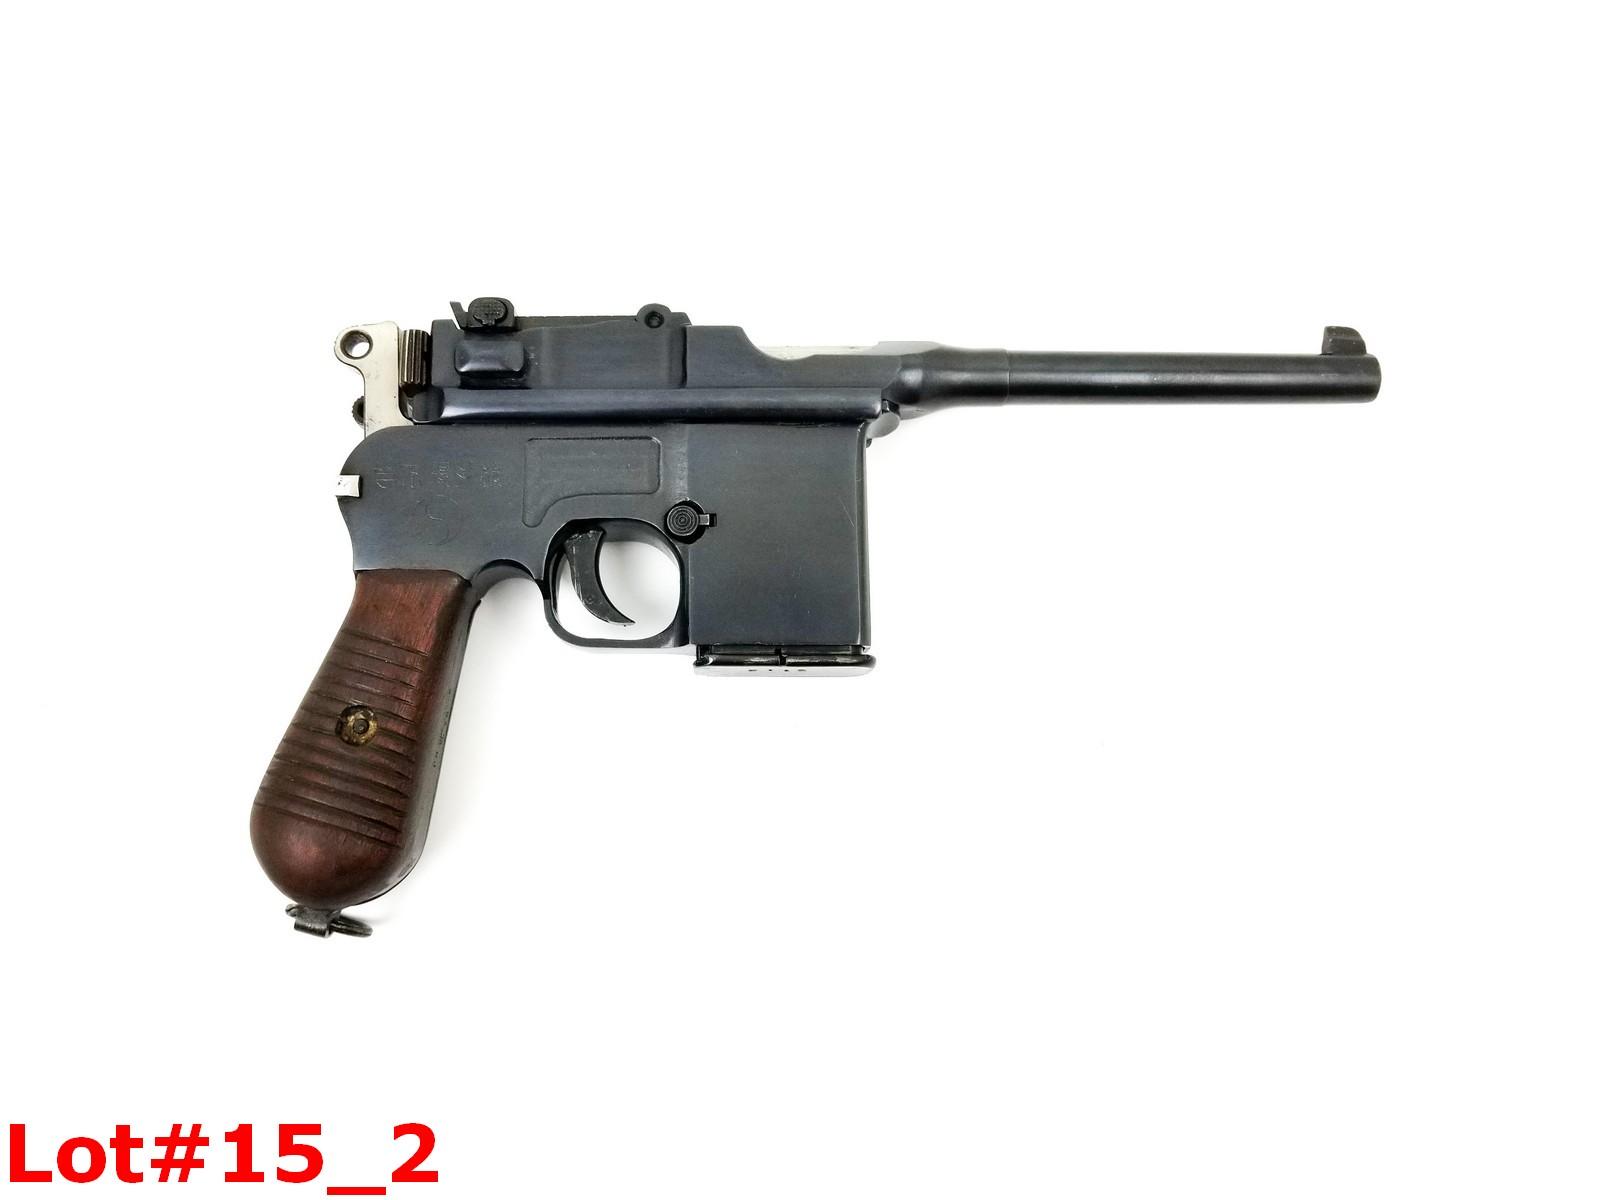 Chinese Made Broomhandle C96 9mm Pistol